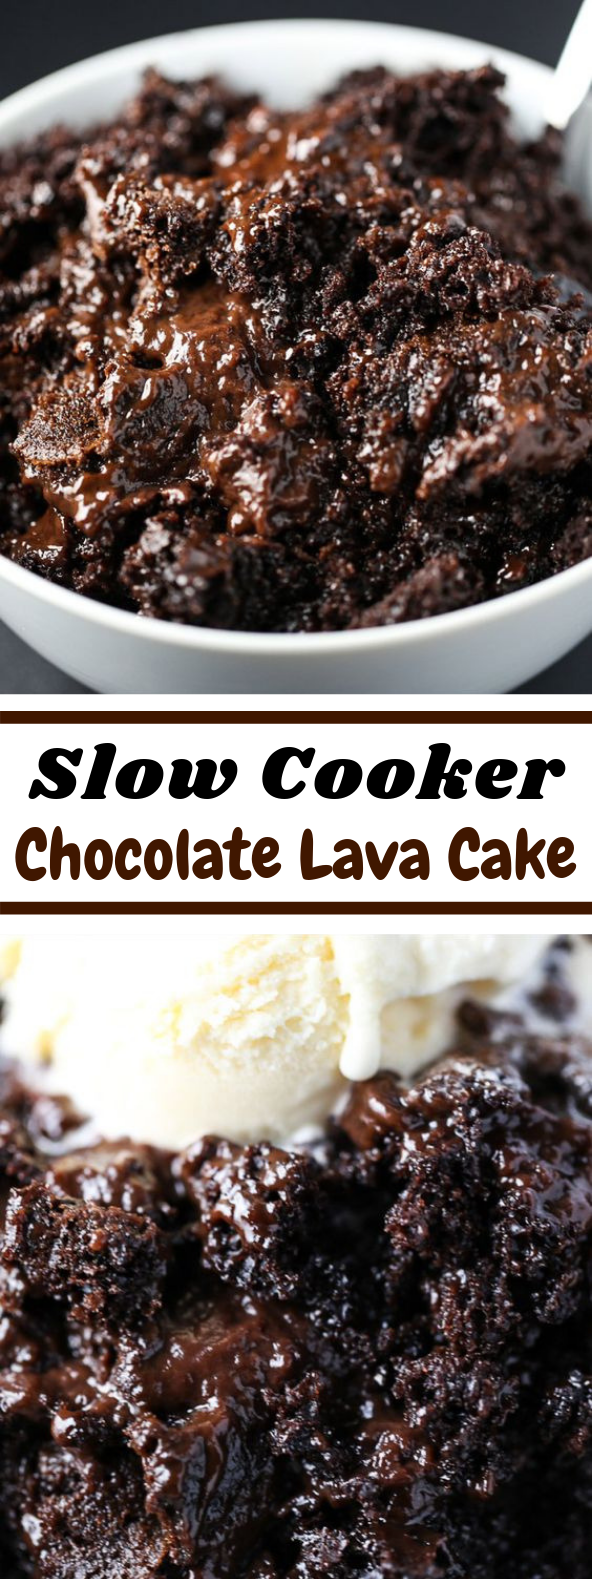 SLOW COOKER CHOCOLATE LAVA CAKE